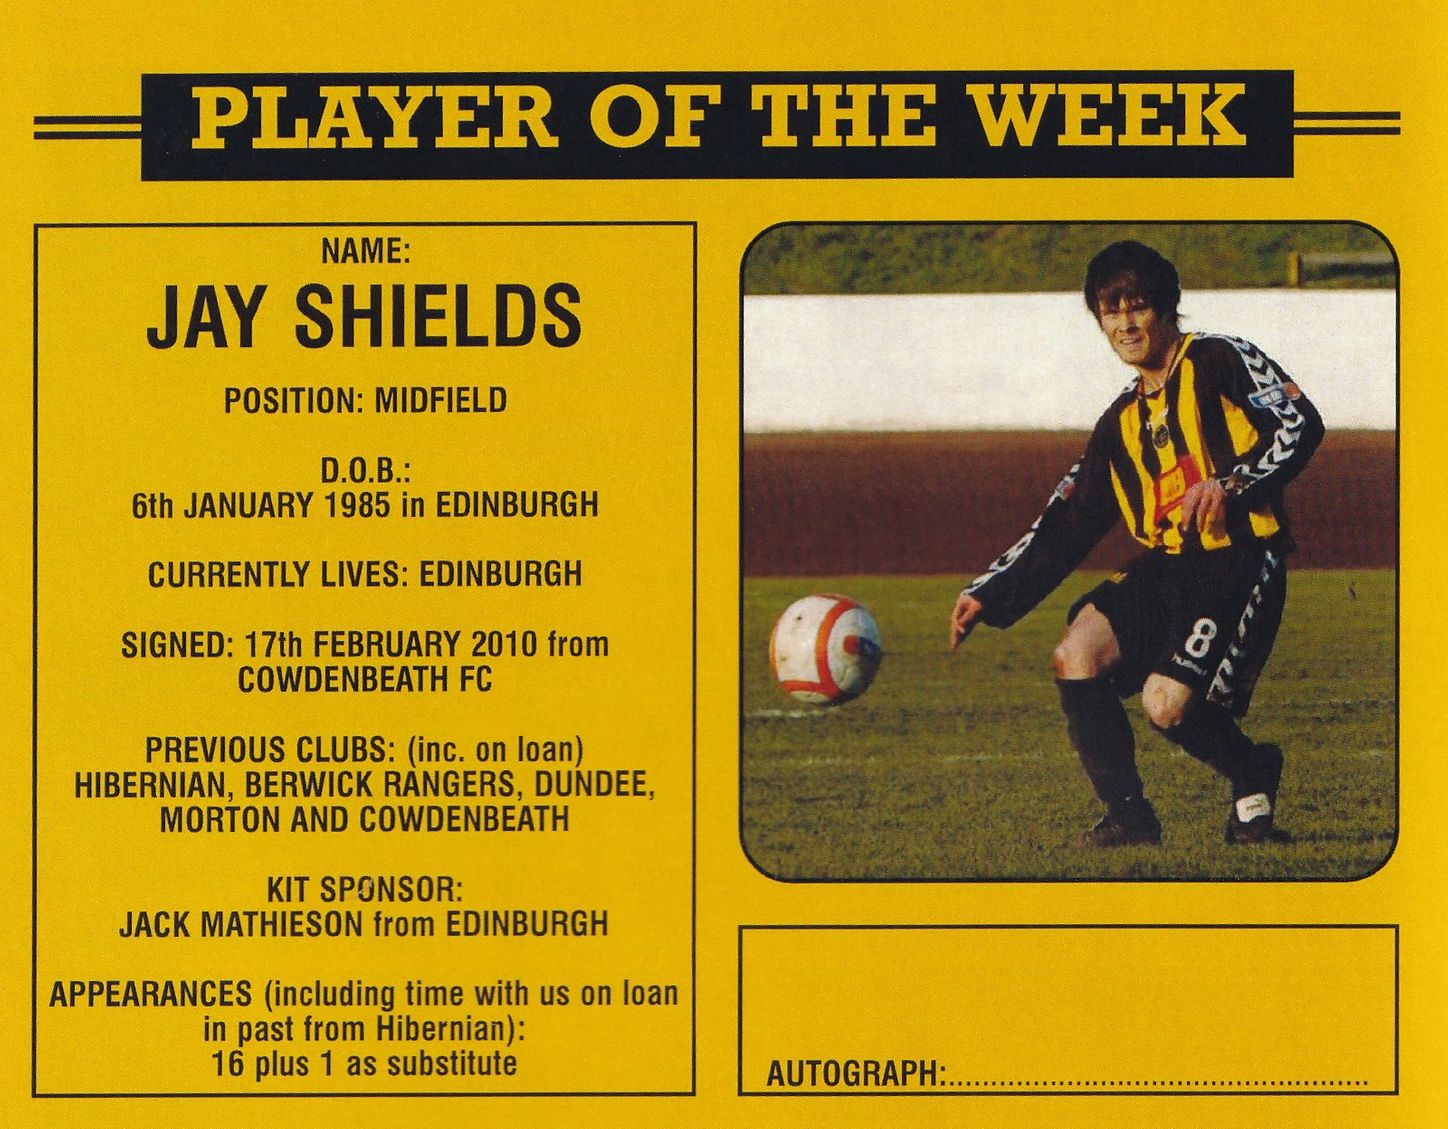 Jay Shields